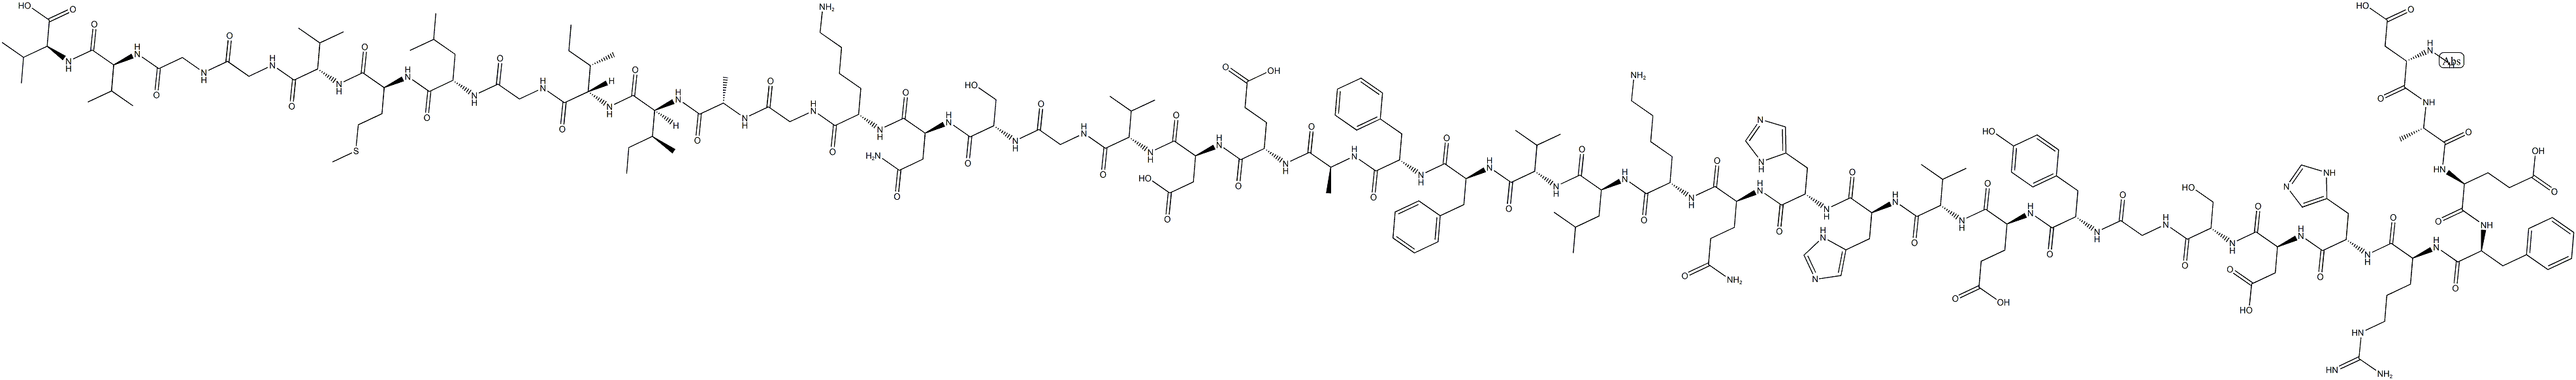 BETA淀粉样蛋白片段1-40 结构式